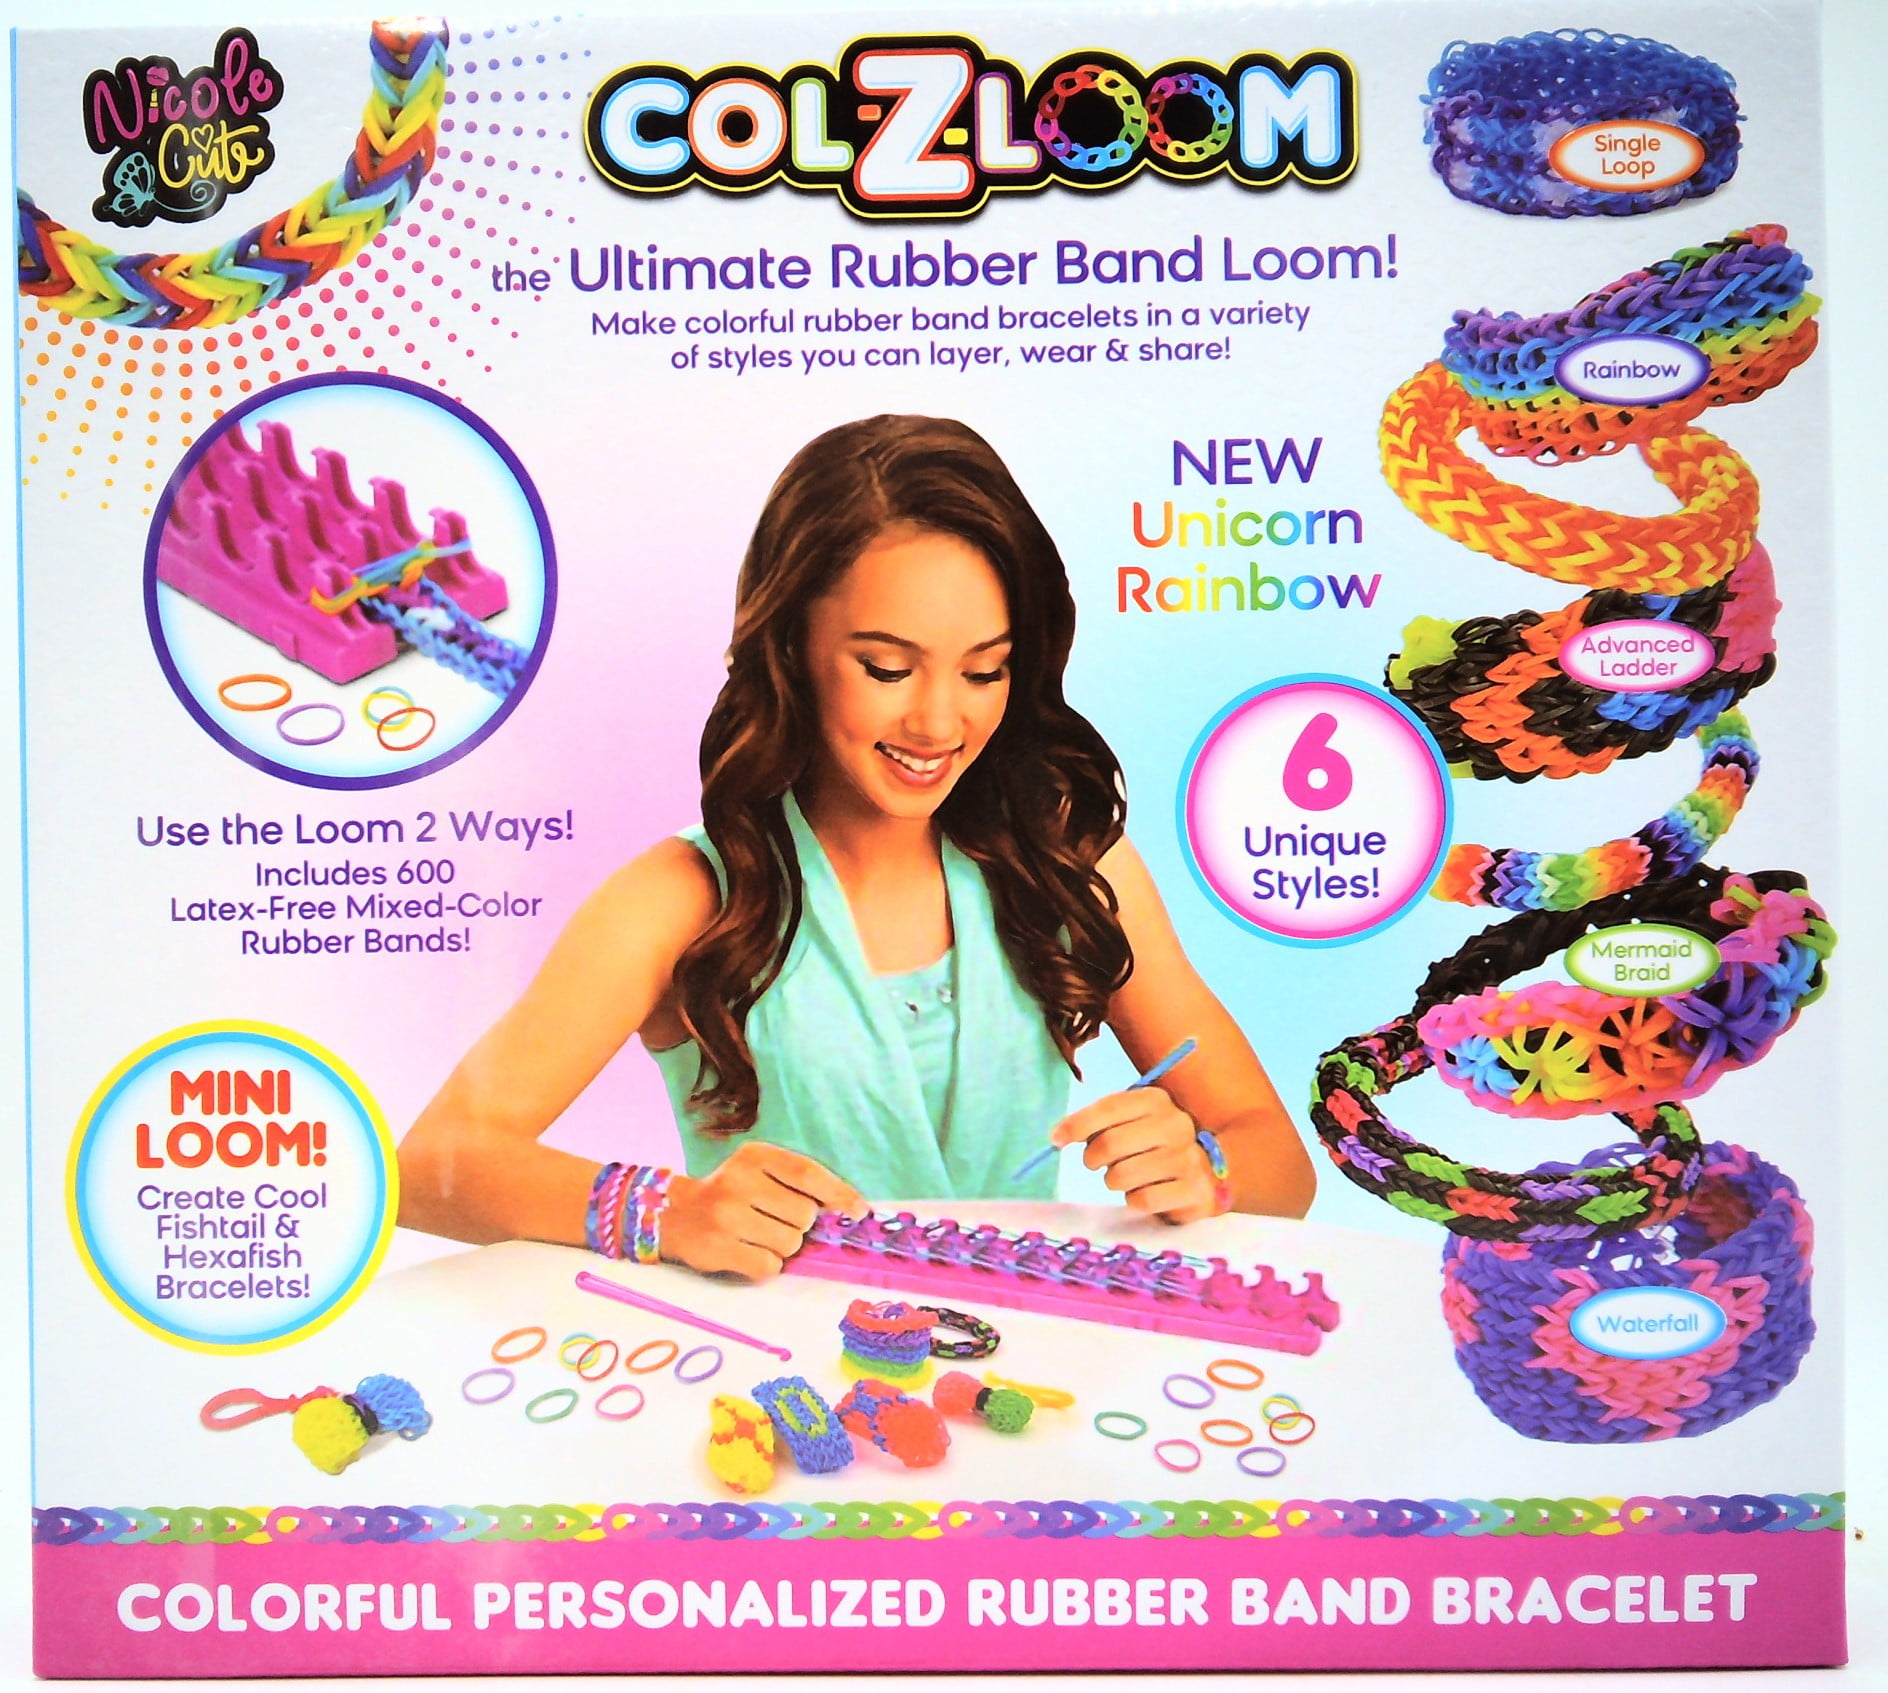 Loom Traininggirls' Silicone Charm Bracelet Kit - 300pcs Rubber